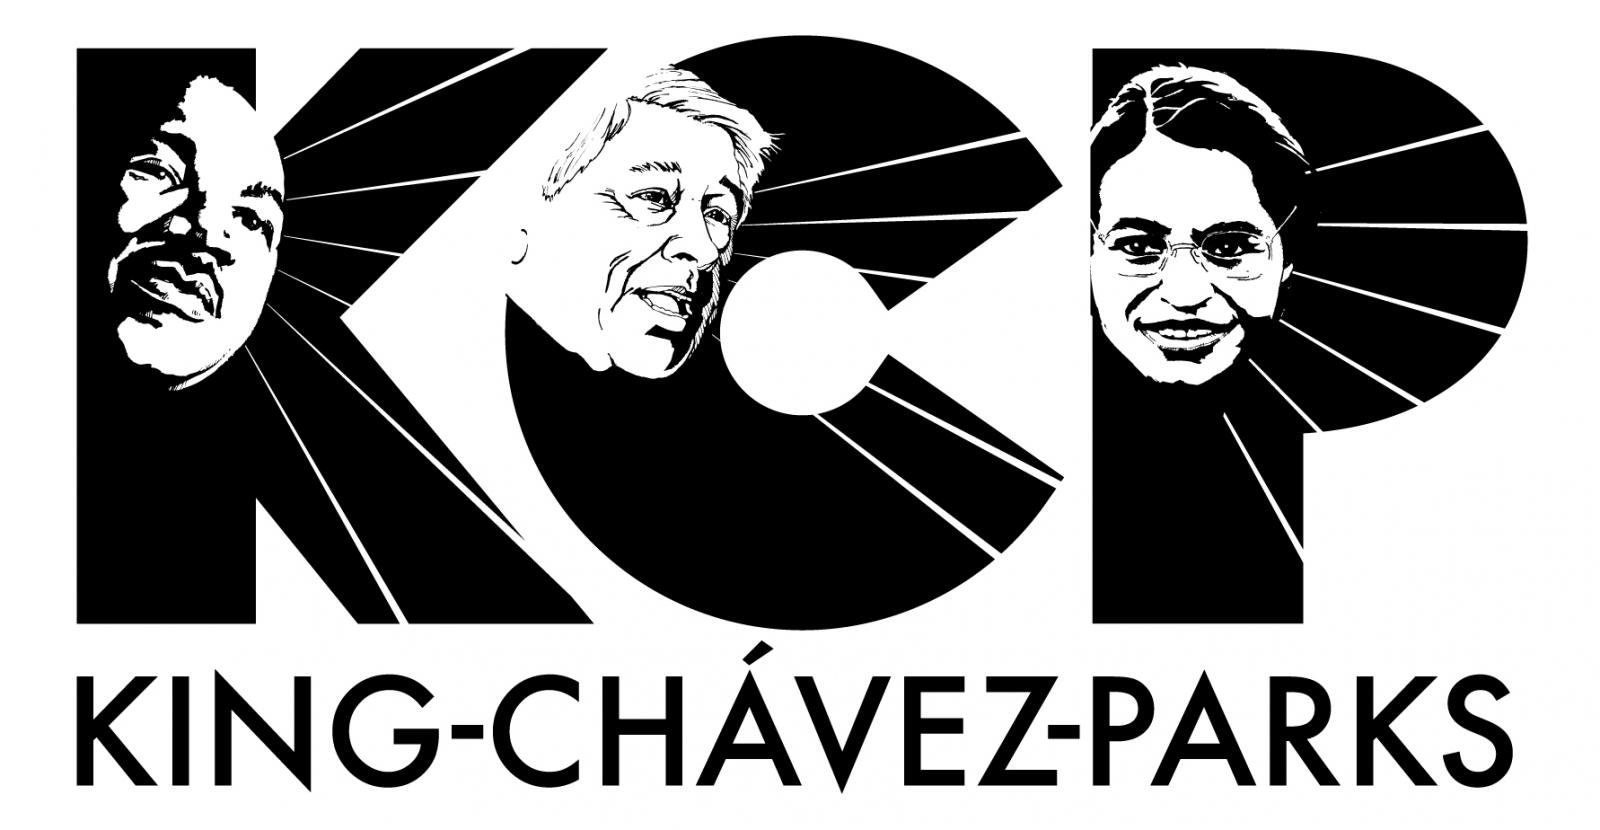 King-Chavez Parks program logo.